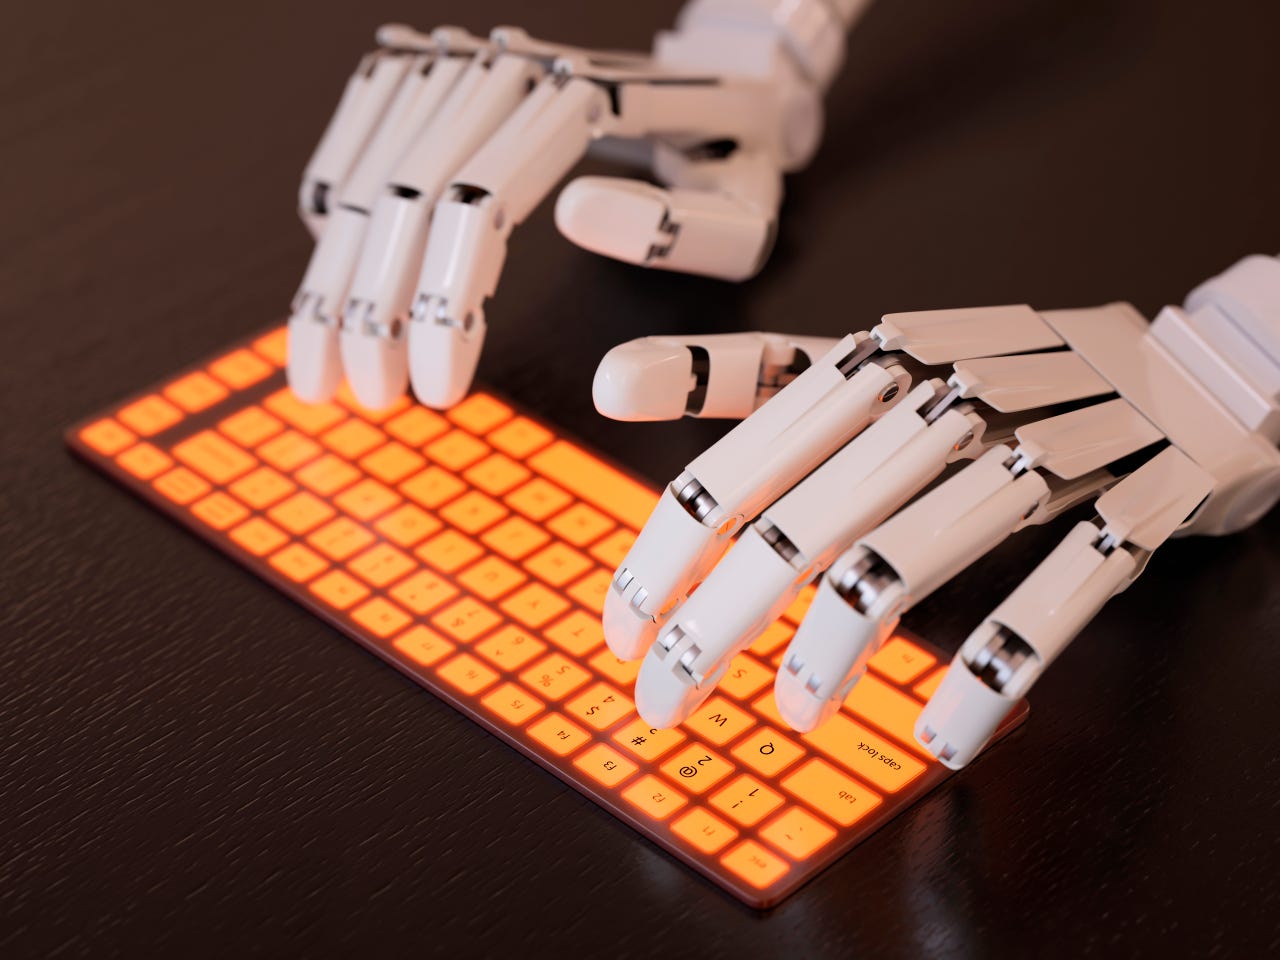 istock-robot-hands-typing-on-keyboard.jpg